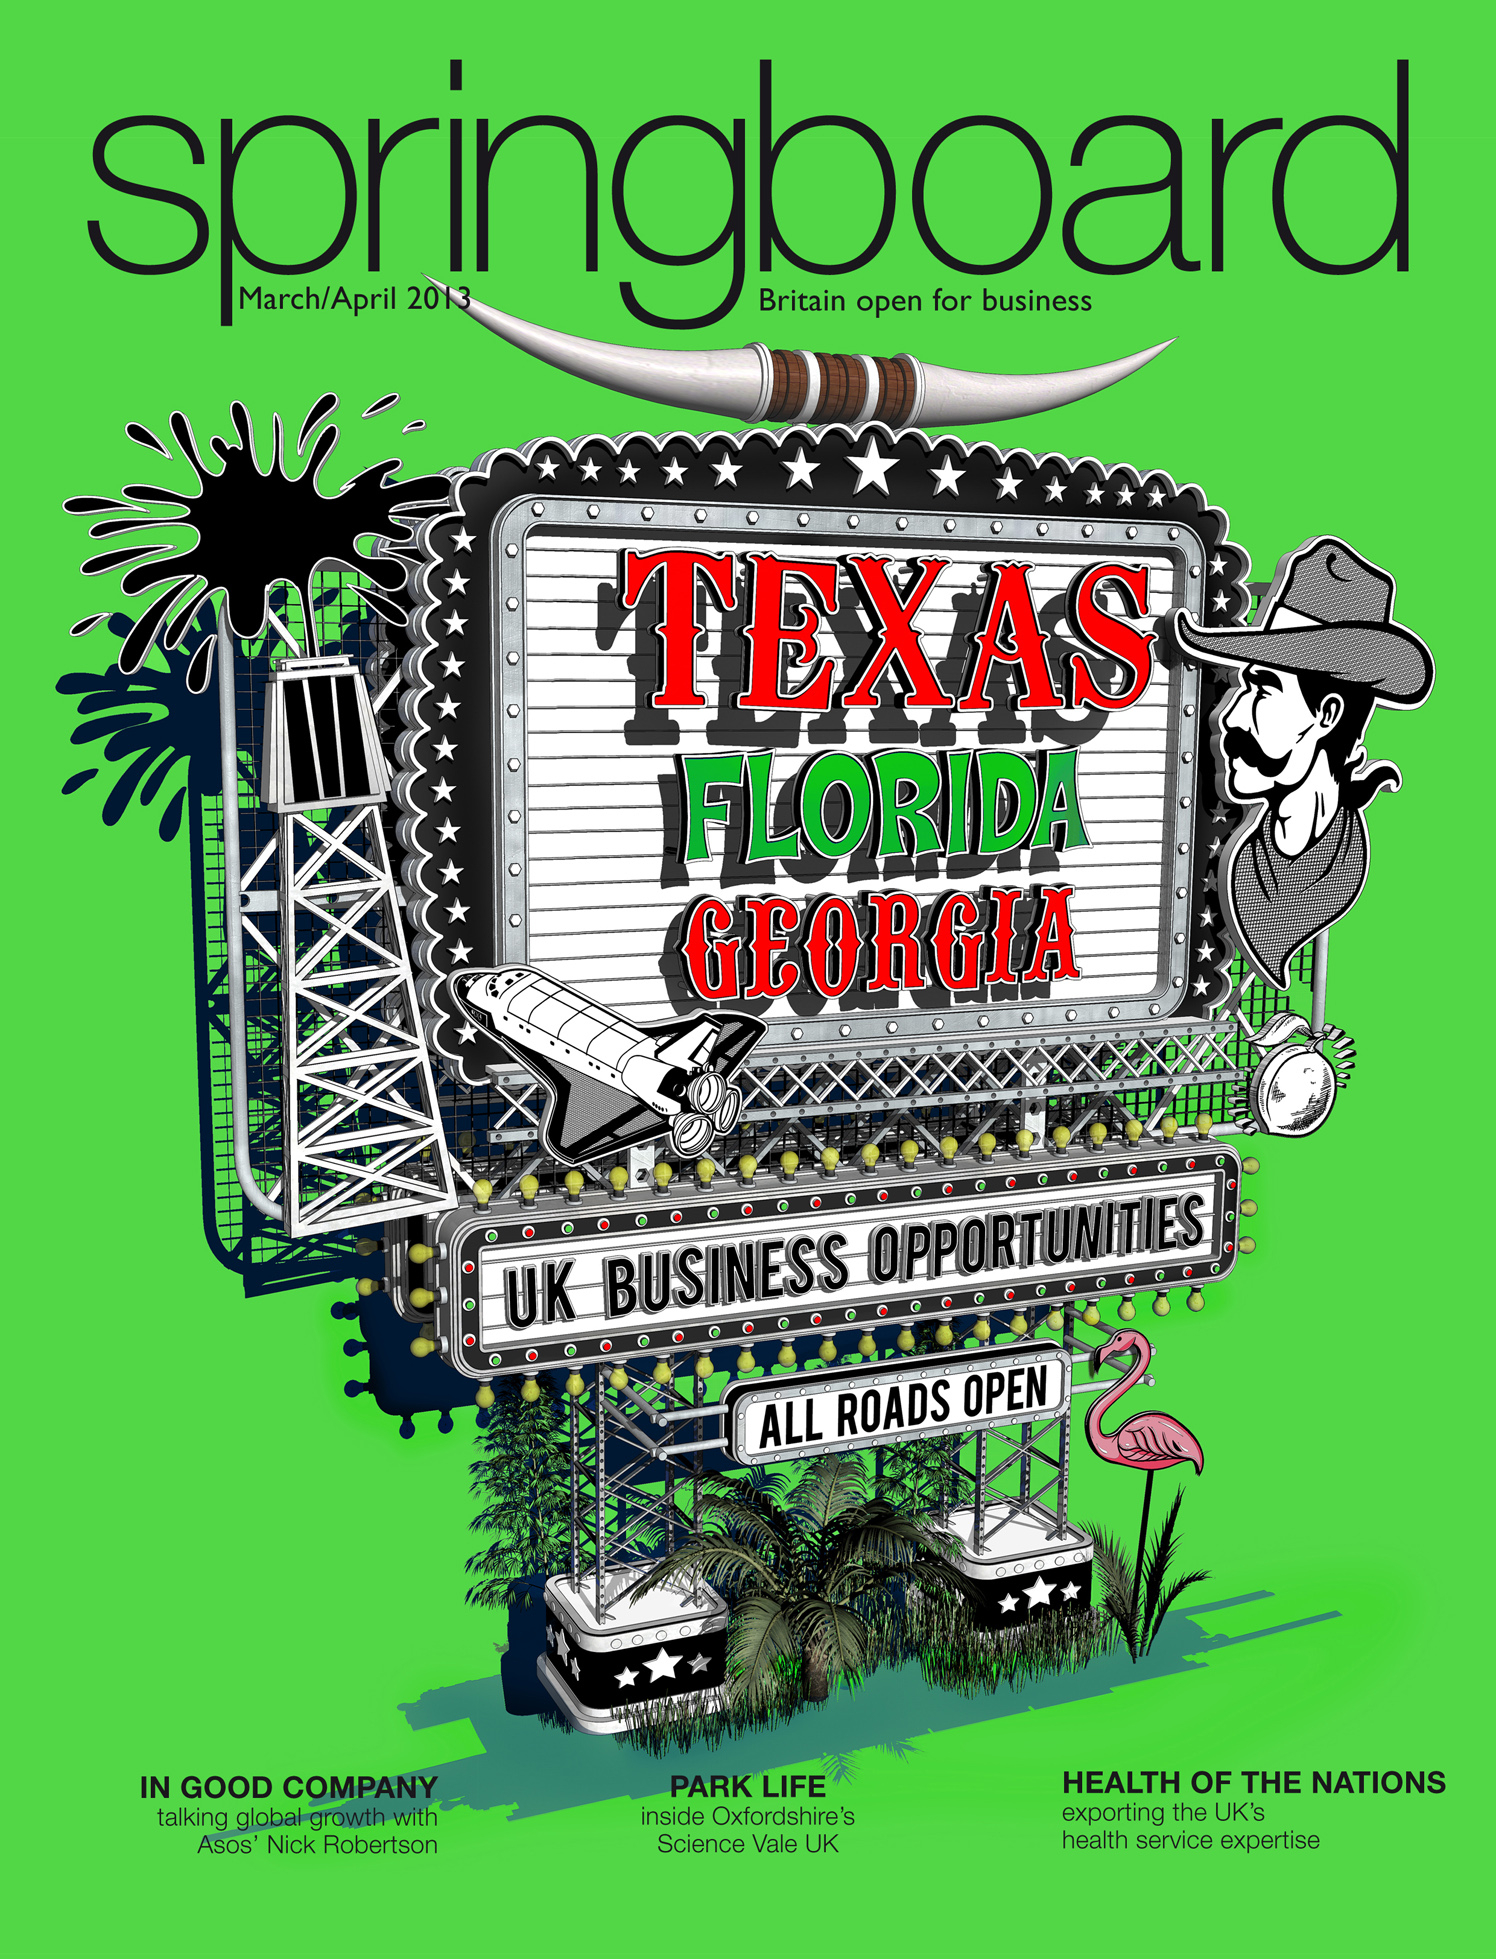 Texas, Florida and Georgia / Springboard Magazine